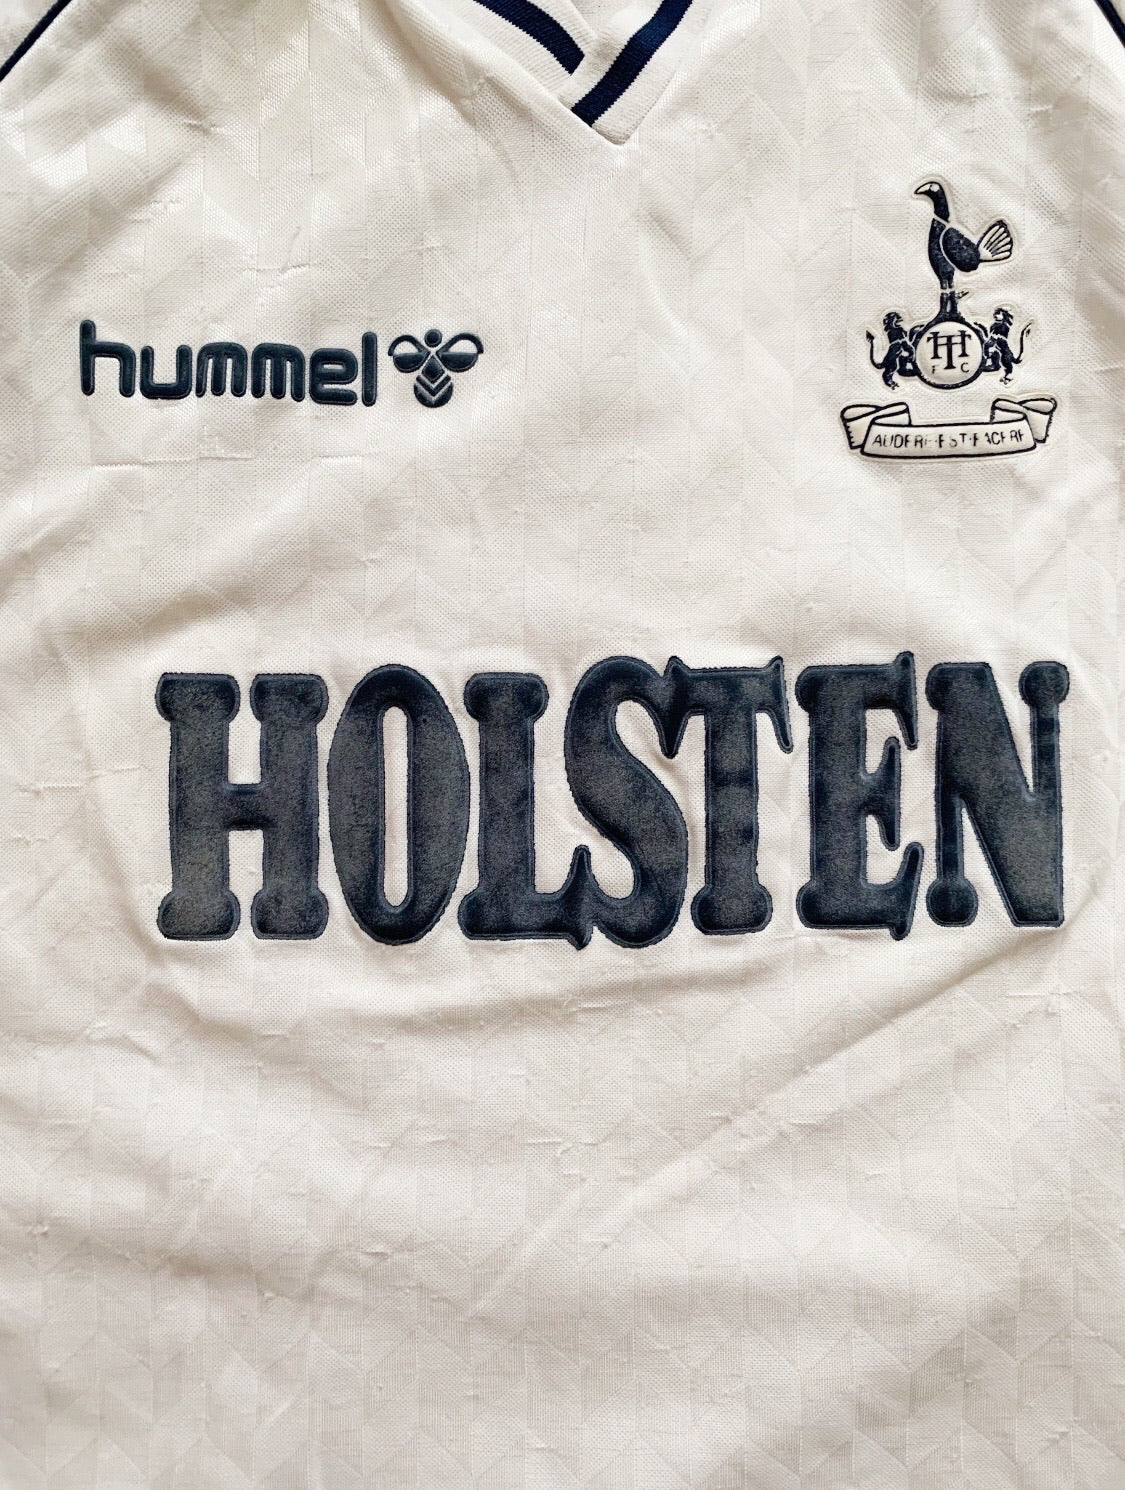 1987/89 Camiseta de local del Tottenham Hotspur (Y) 5/10